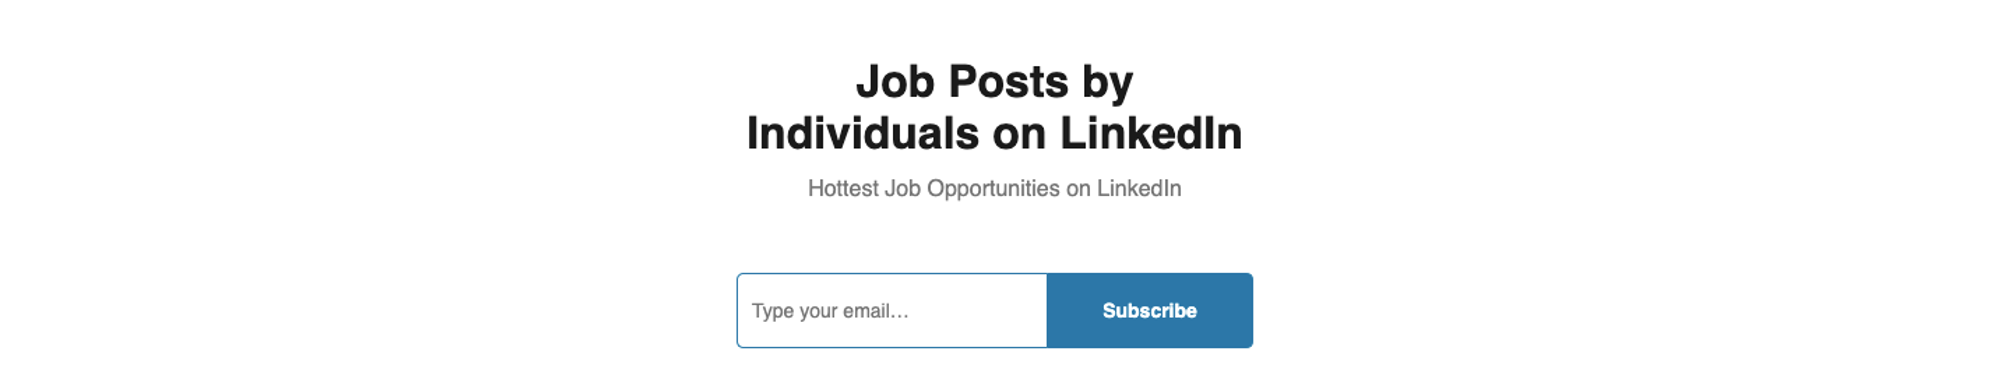 Job Post By Individuals on LinkedIn